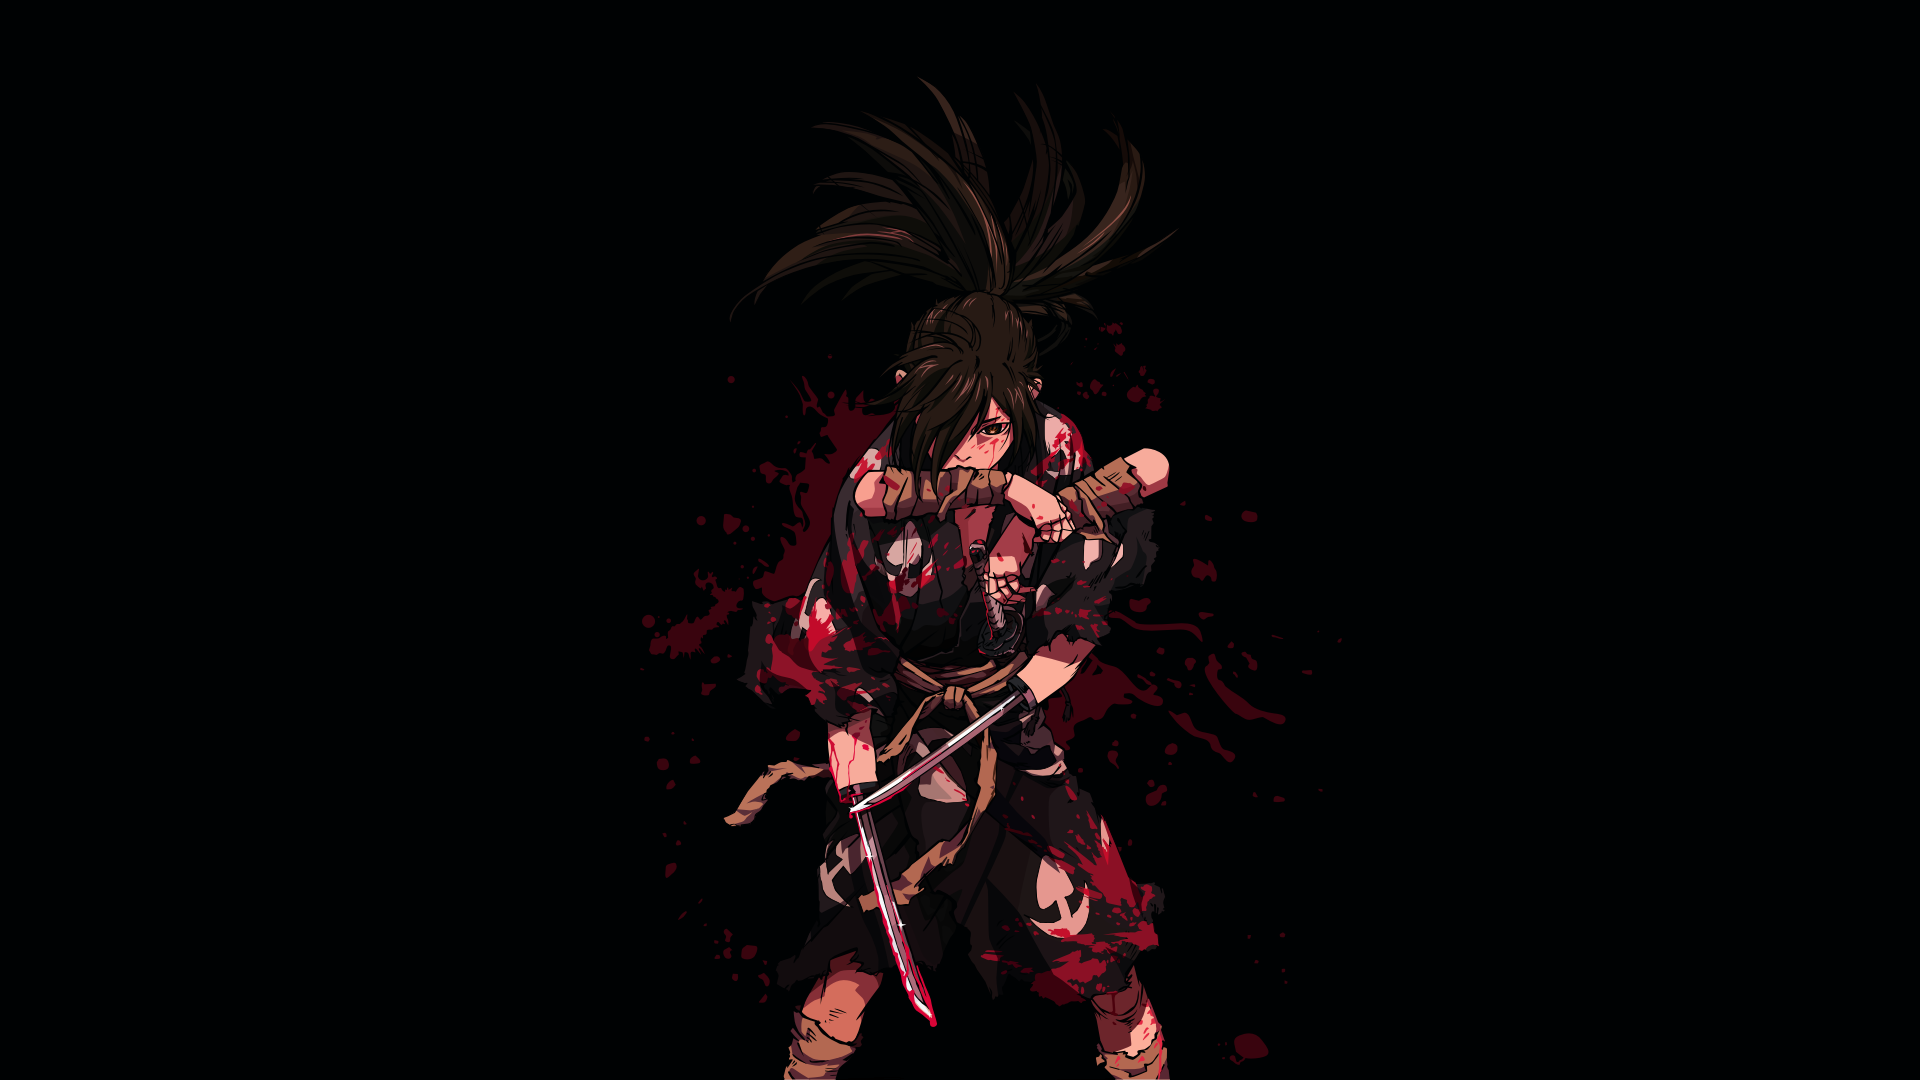 Anime 1920x1080 Hyakkimaru minimalism anime Dororo samurai black background blood spatter